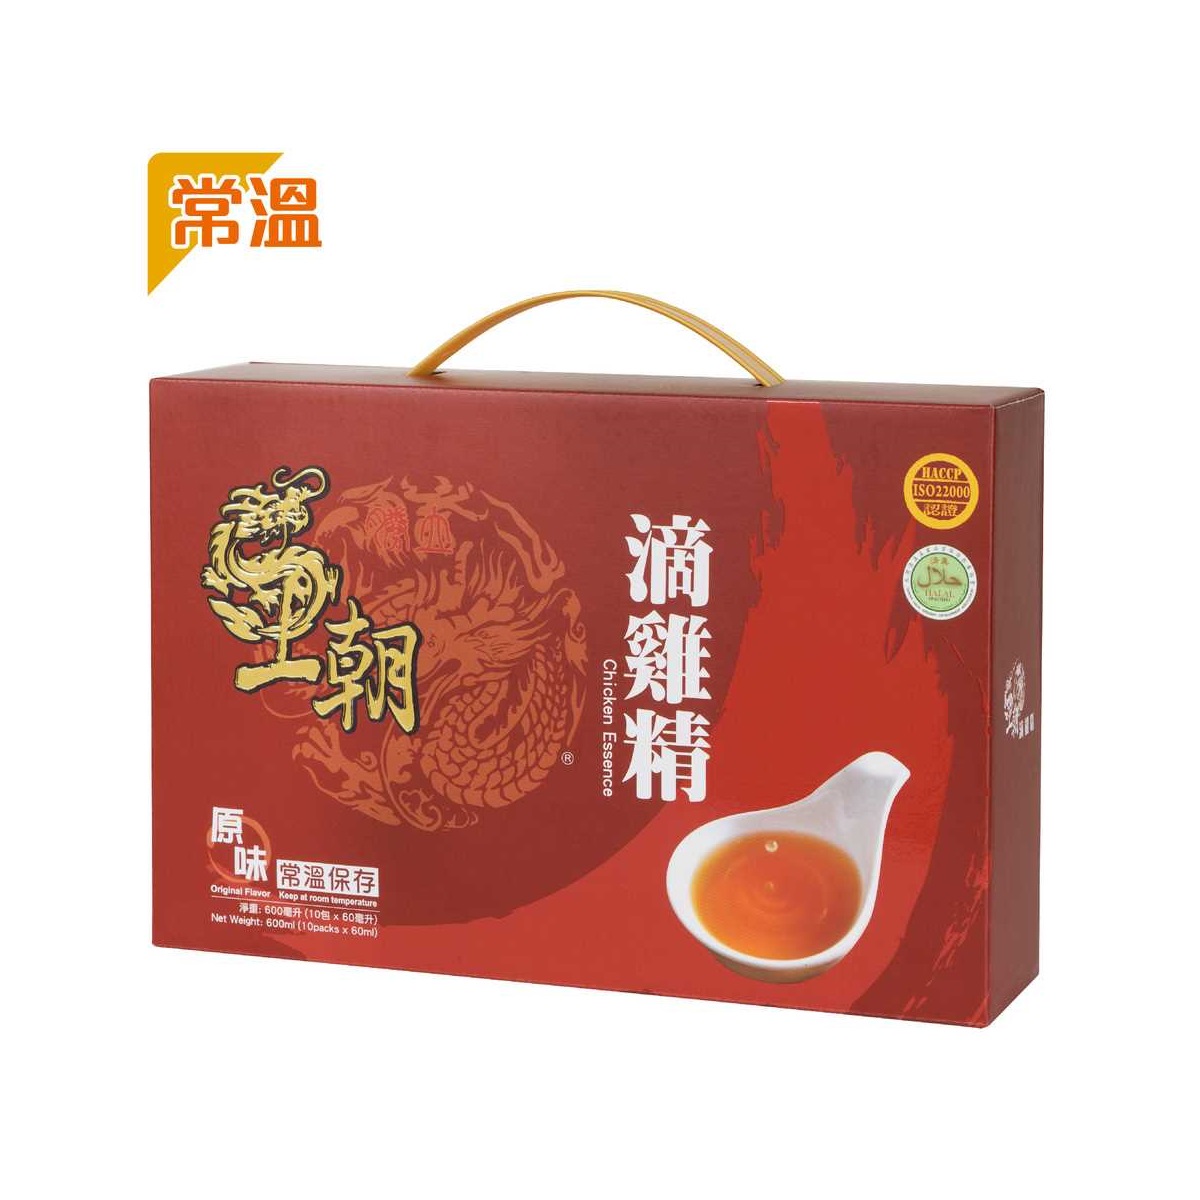 Wang Chao Chicken Essence (Original Flavor) (Ambient - 10 Packs)